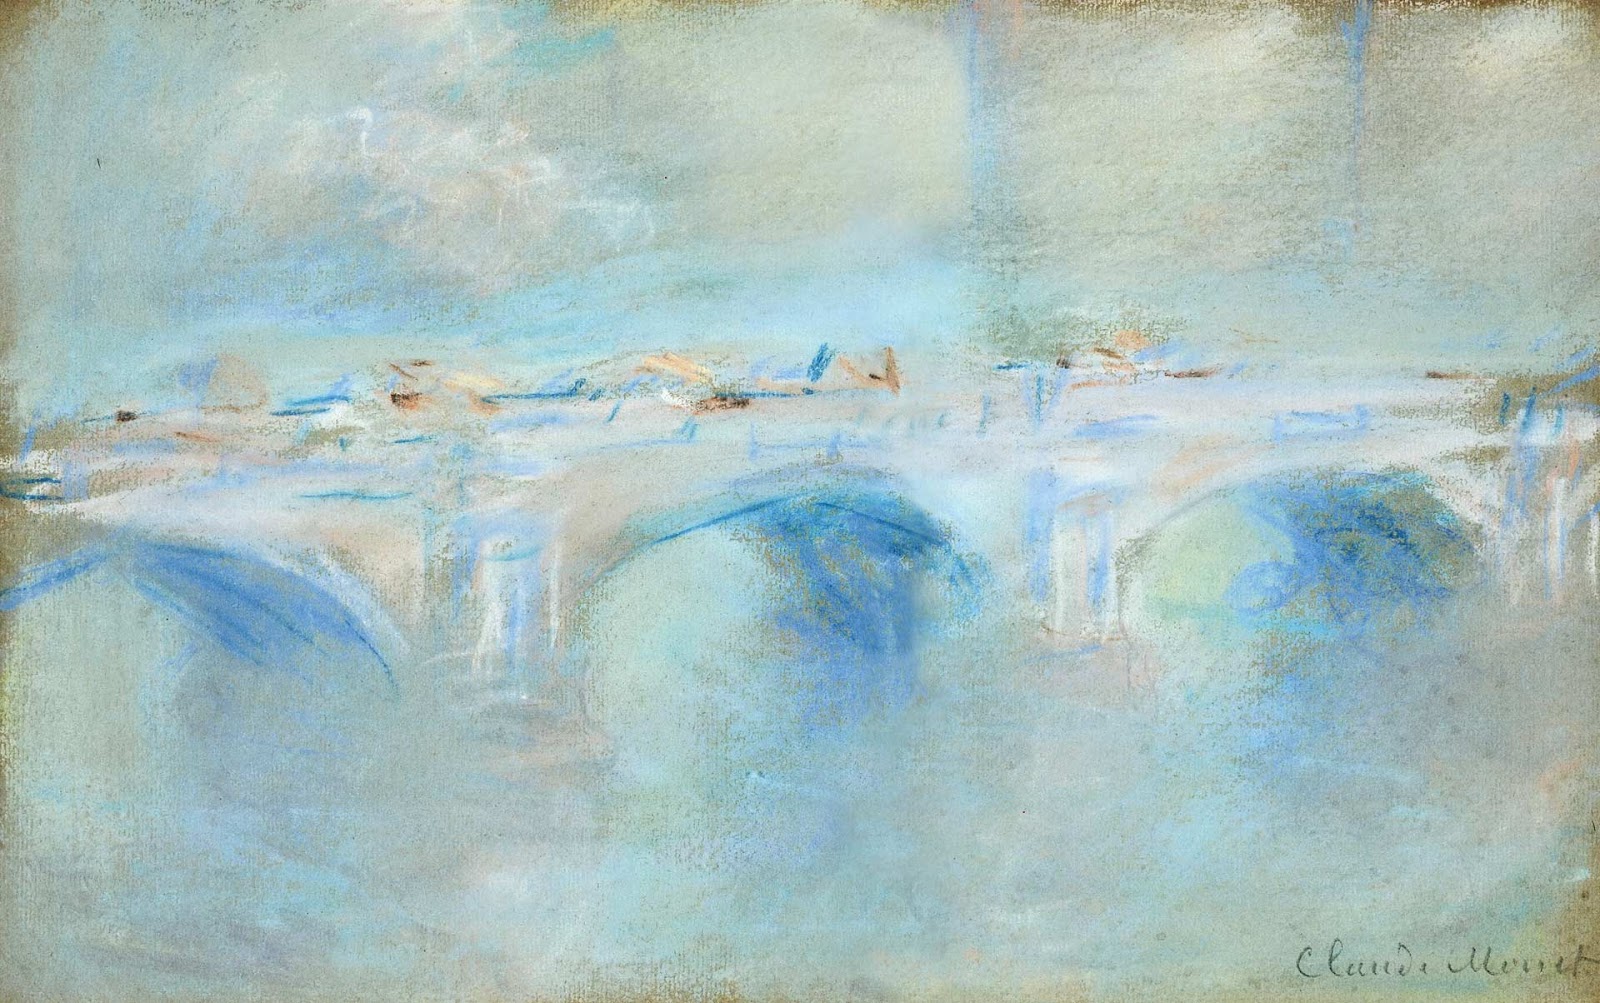 Claude+Monet-1840-1926 (853).jpg